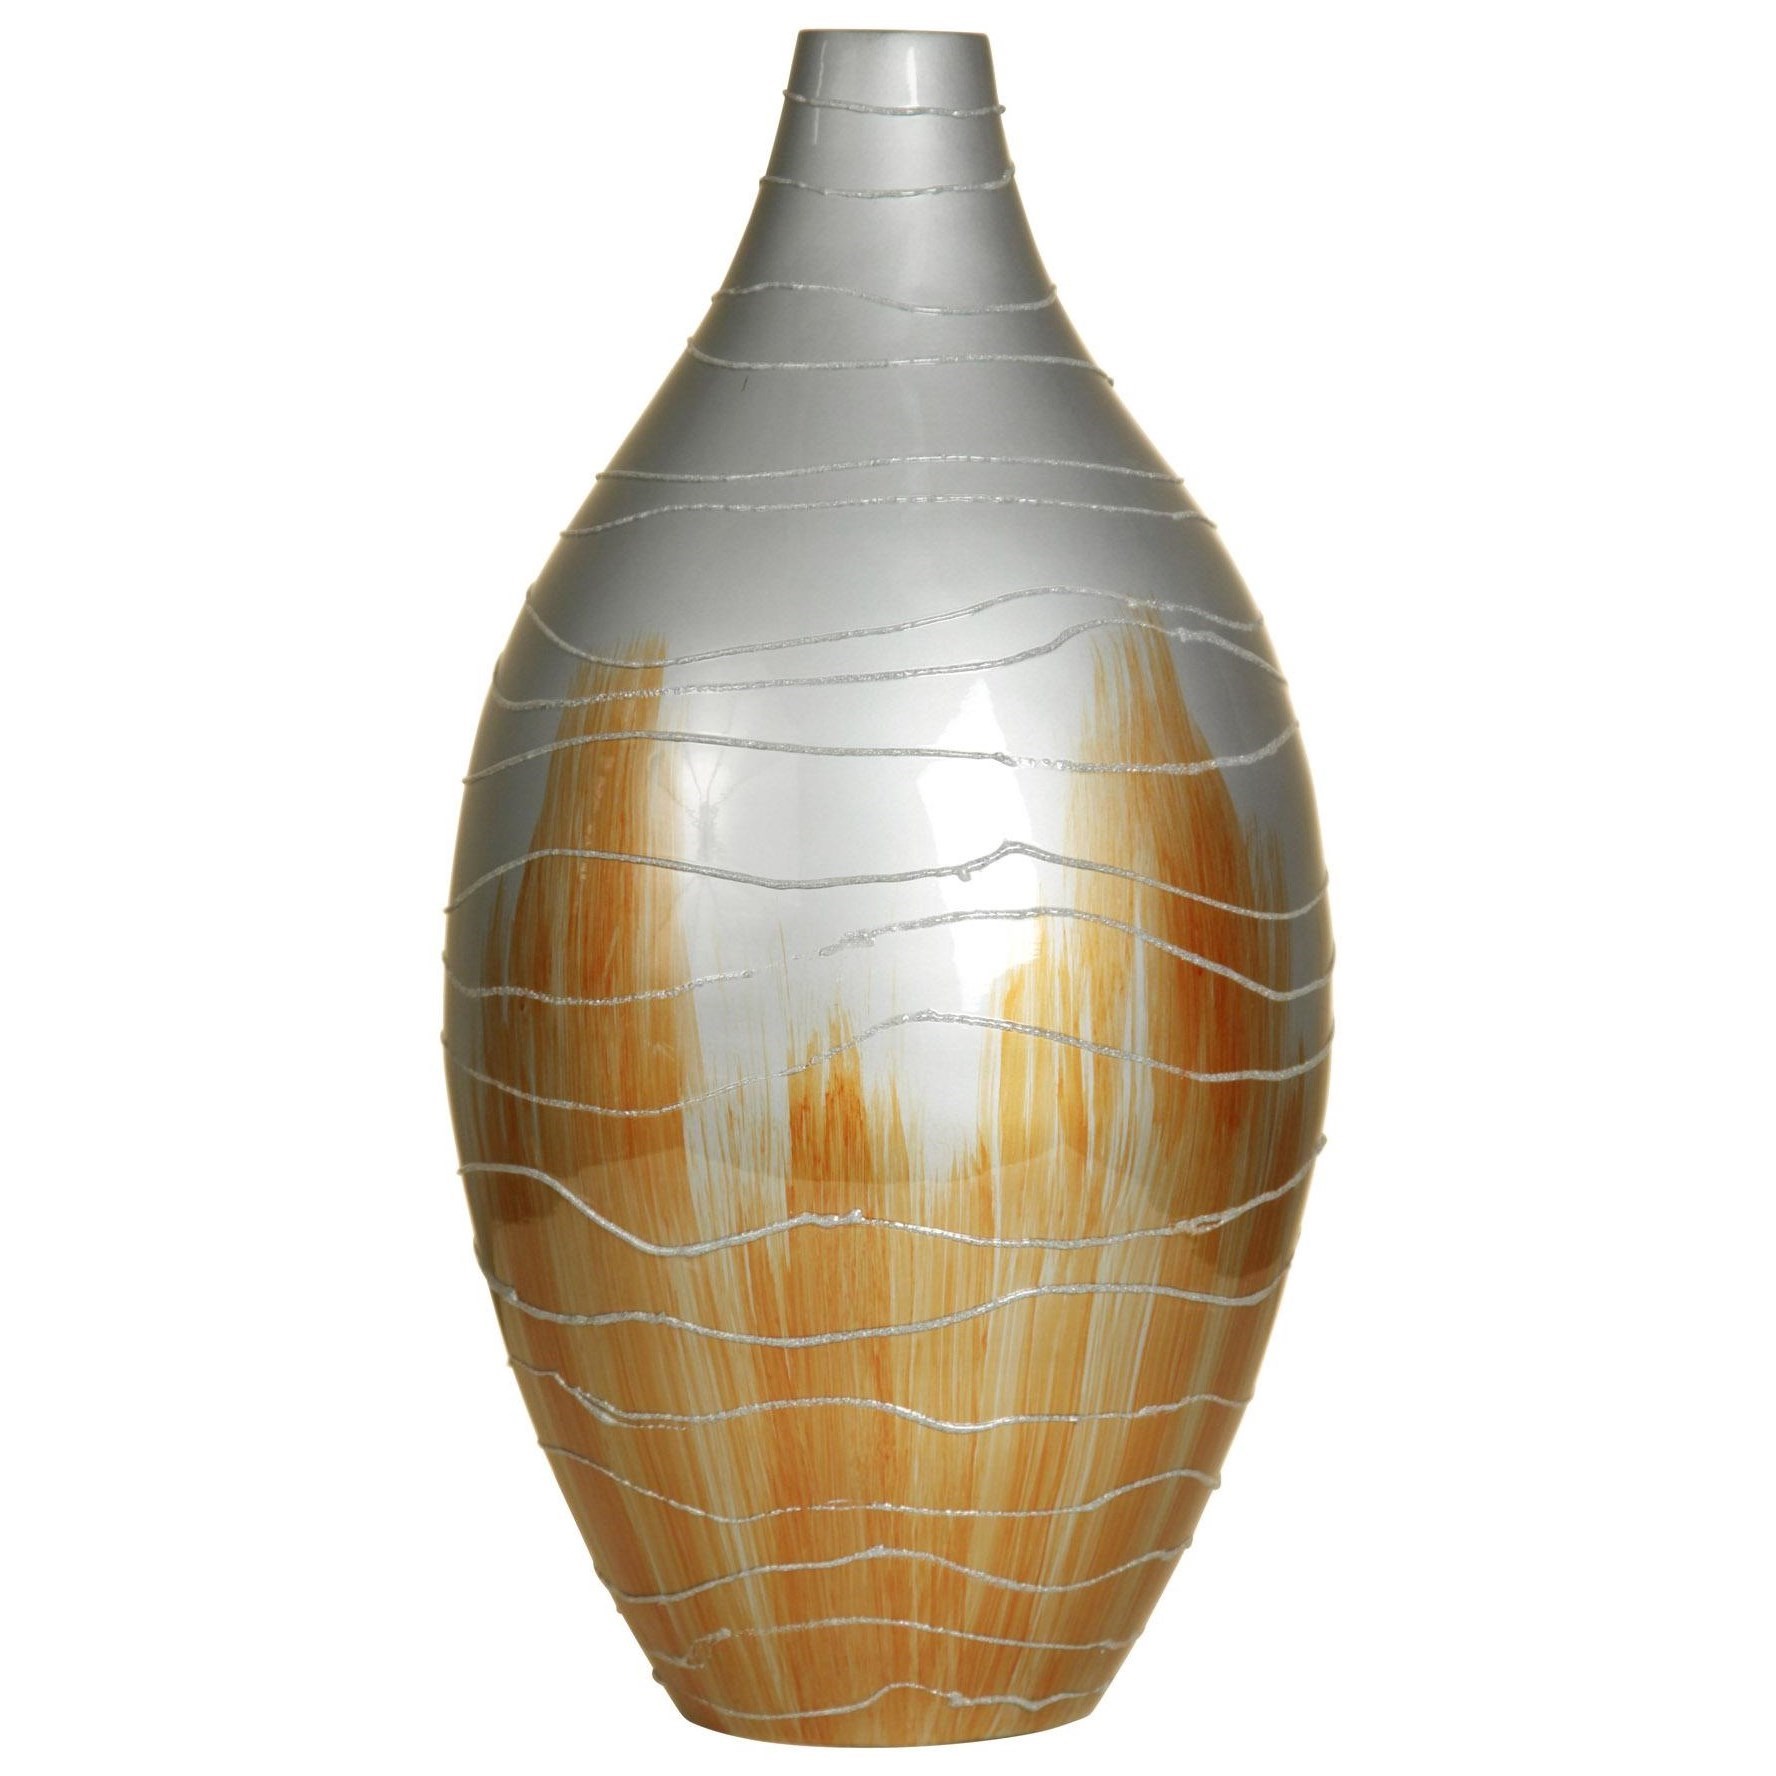 Corner Vase with Raised Grains